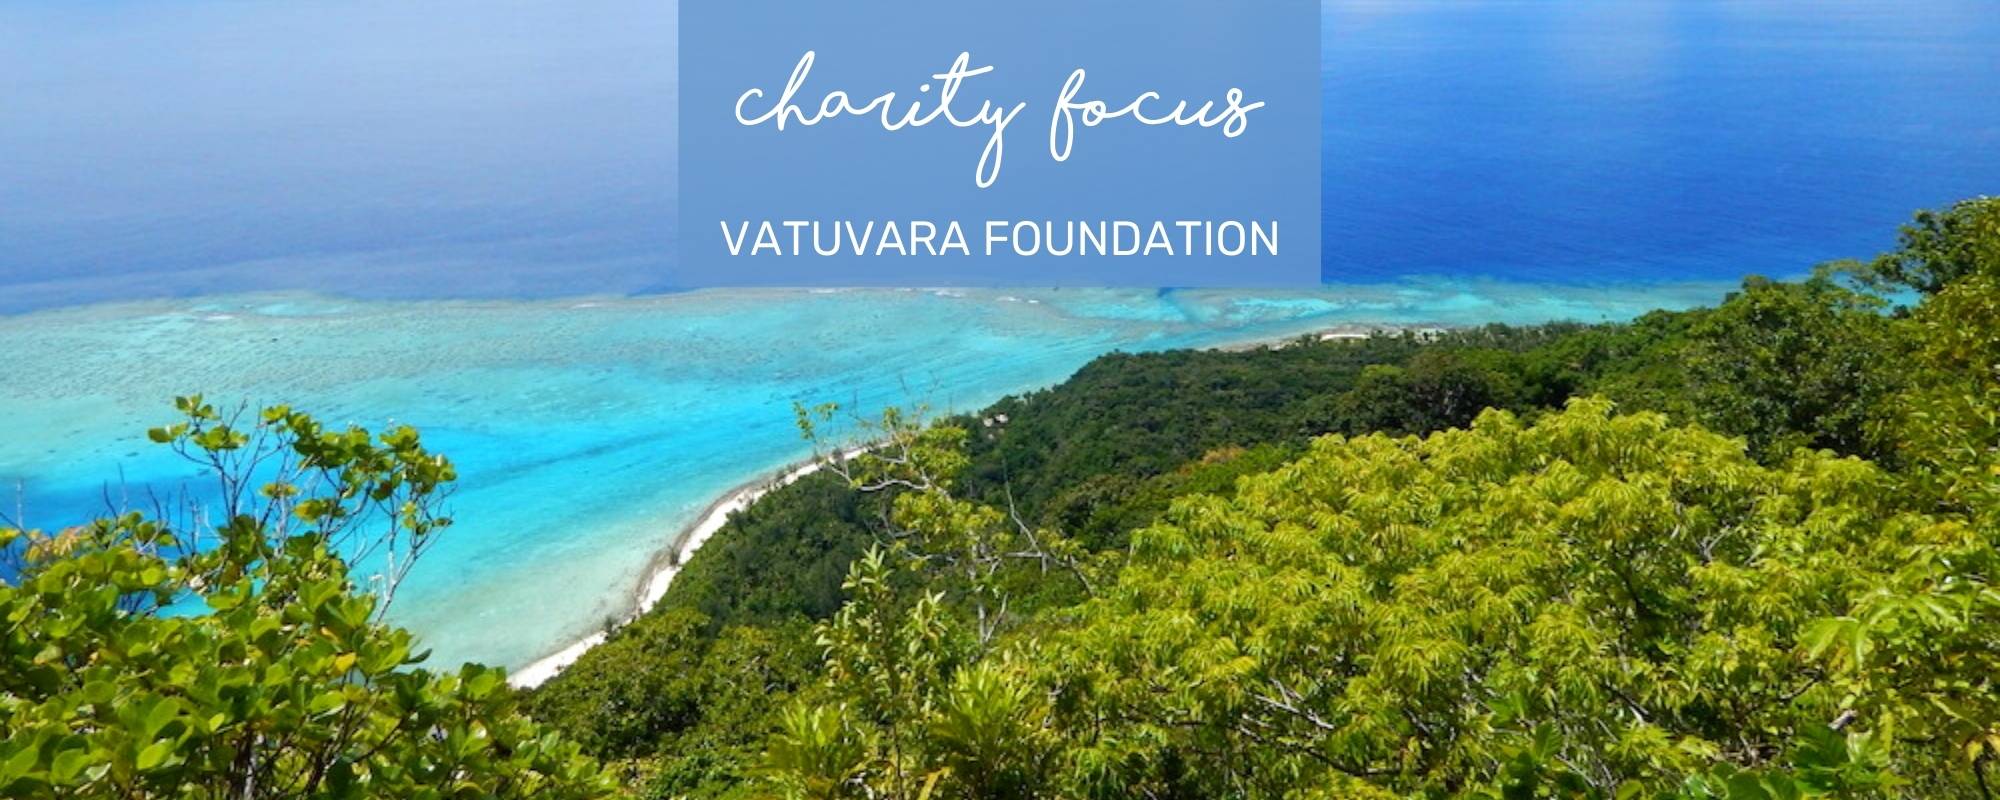 CHARITY FOCUS: VATUVARA FOUNDATION